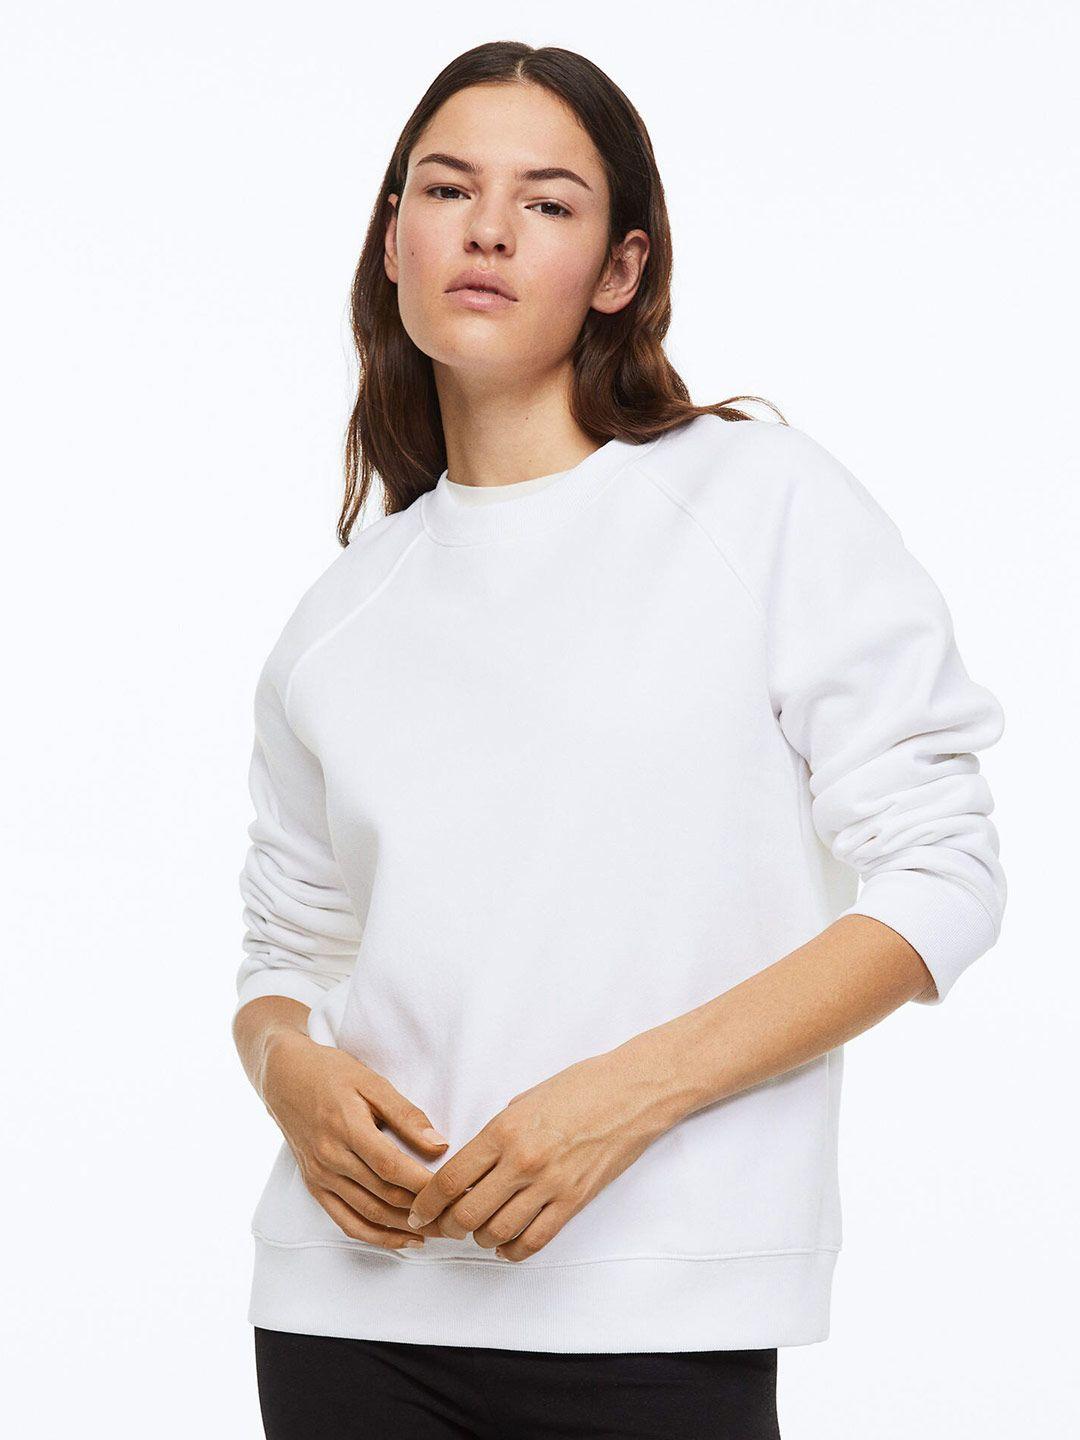 h&m-women-sweatshirt